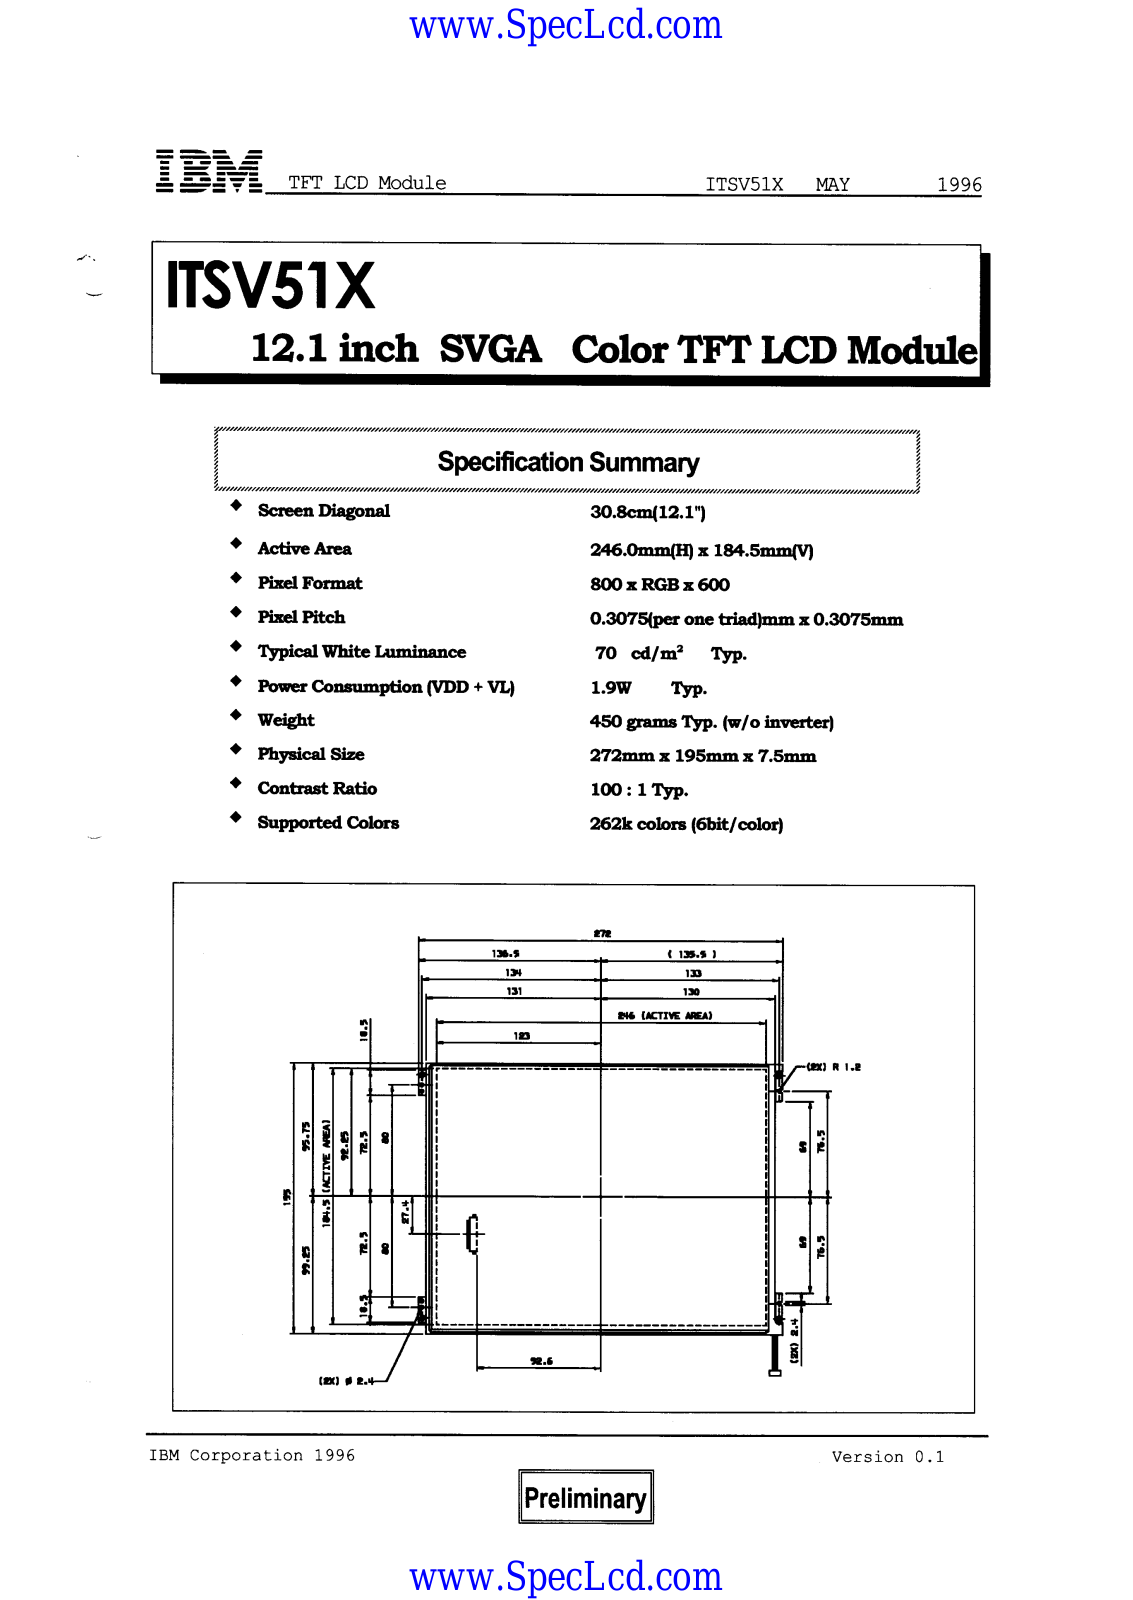 IBM ITSV51X Specification